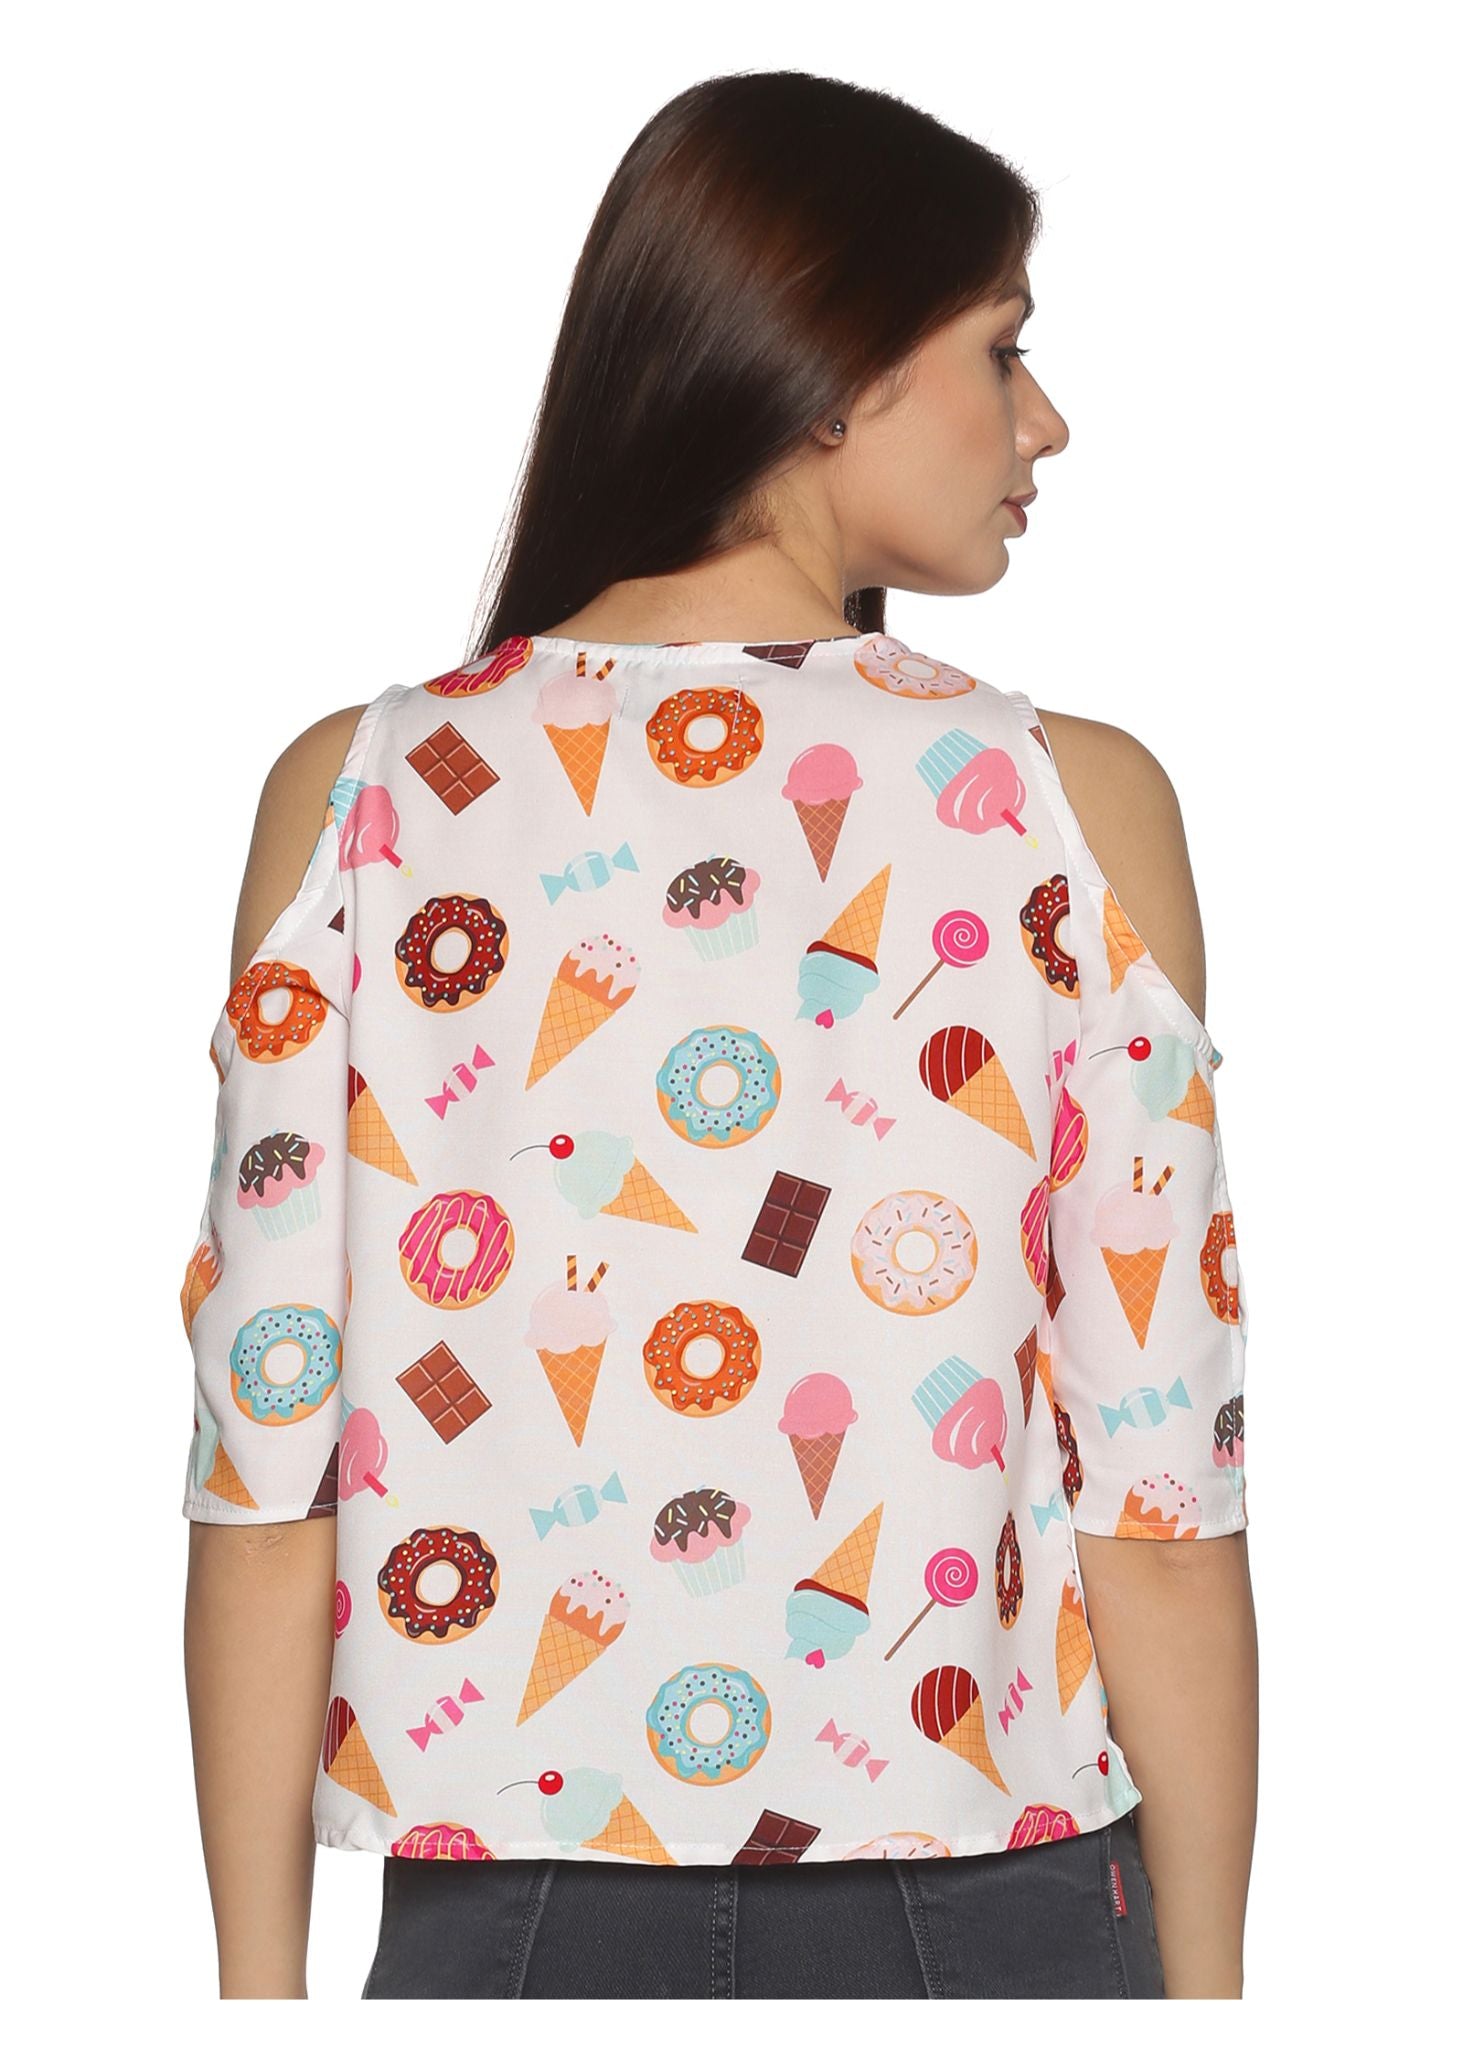 Doughnut Couple Matching Dress - Tusok